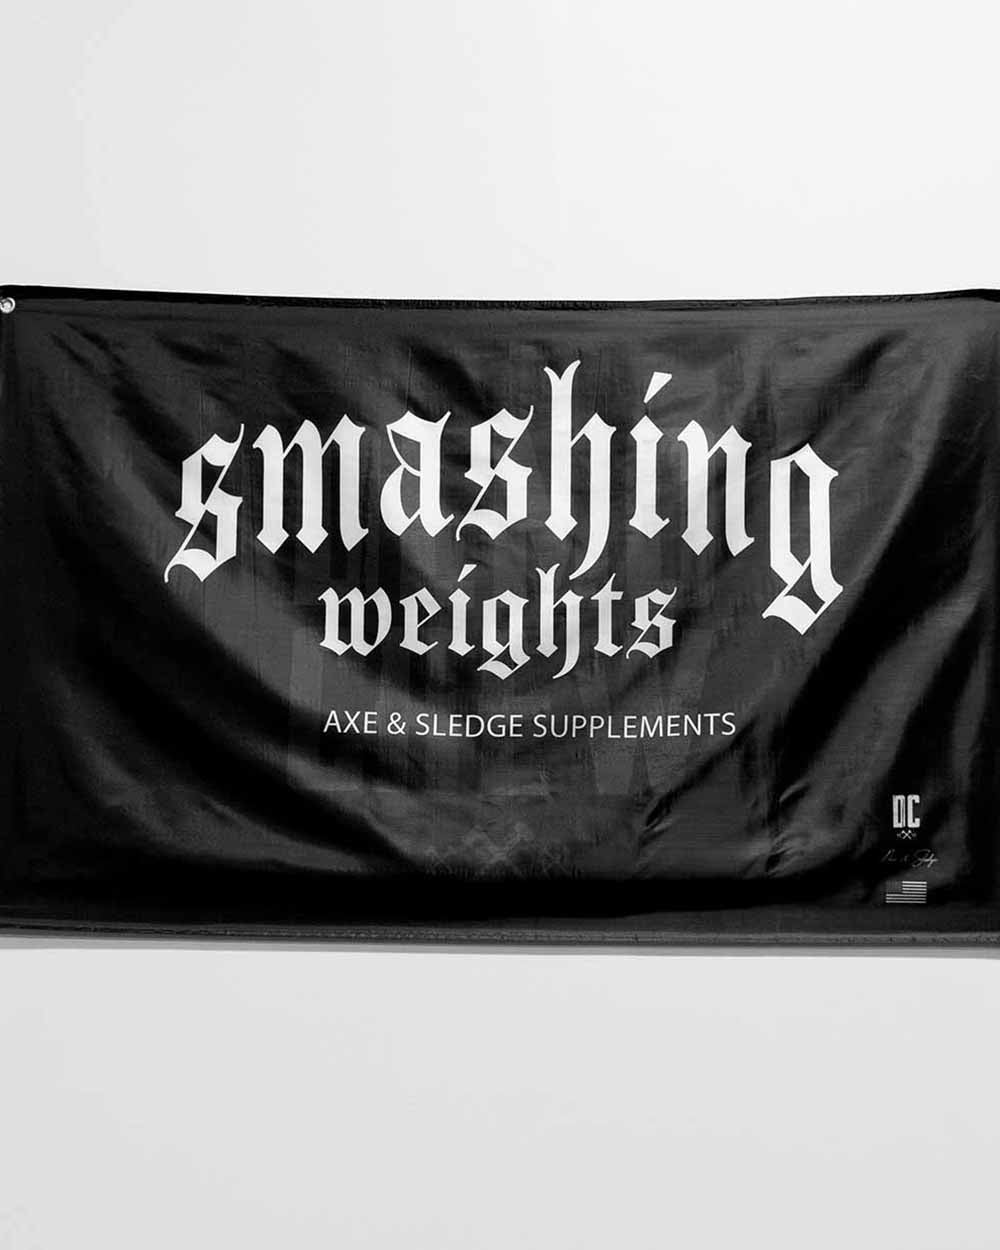 Demo Crew Smashing Weights Flag